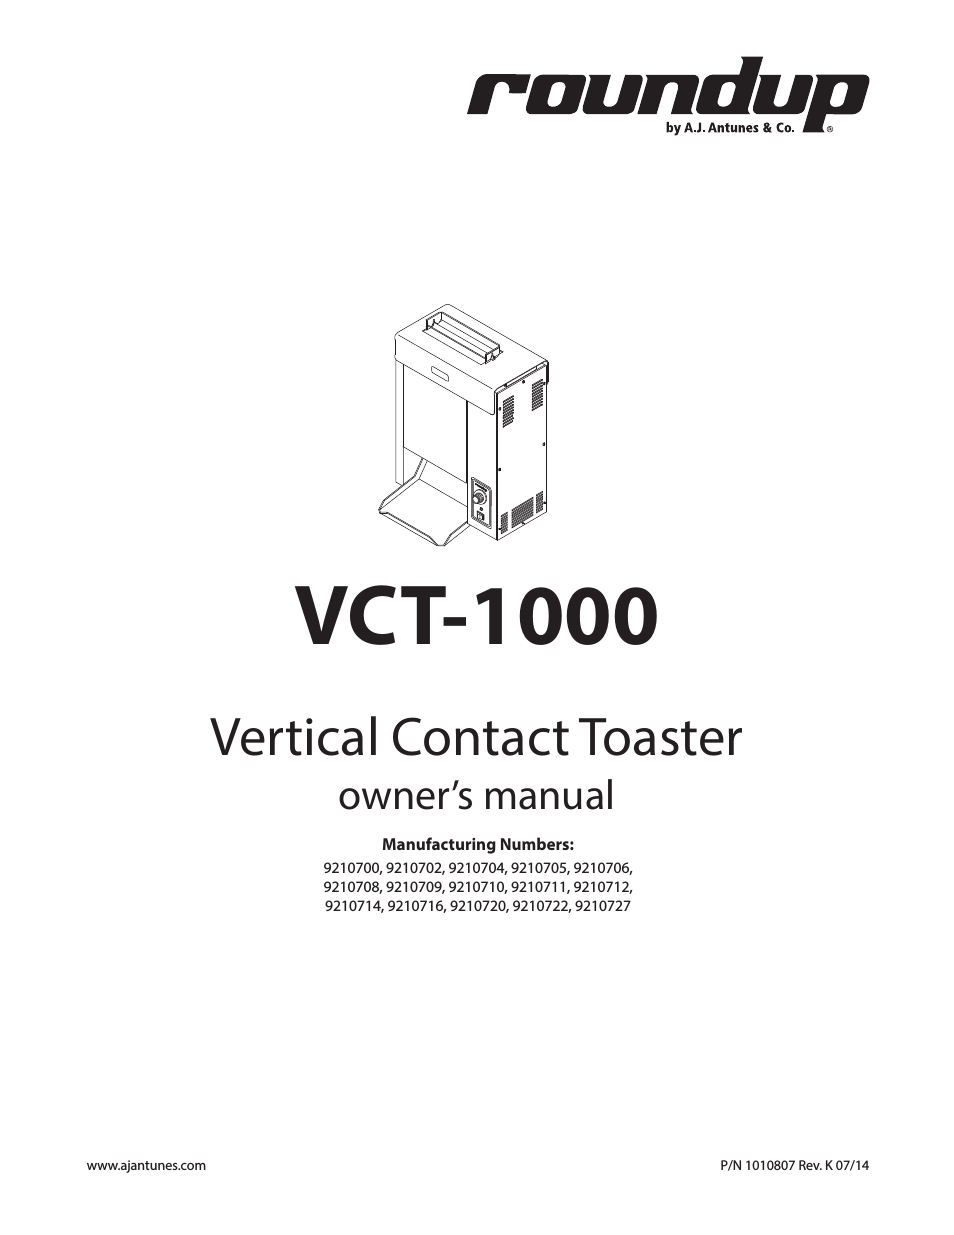 VCT-1000 9210714